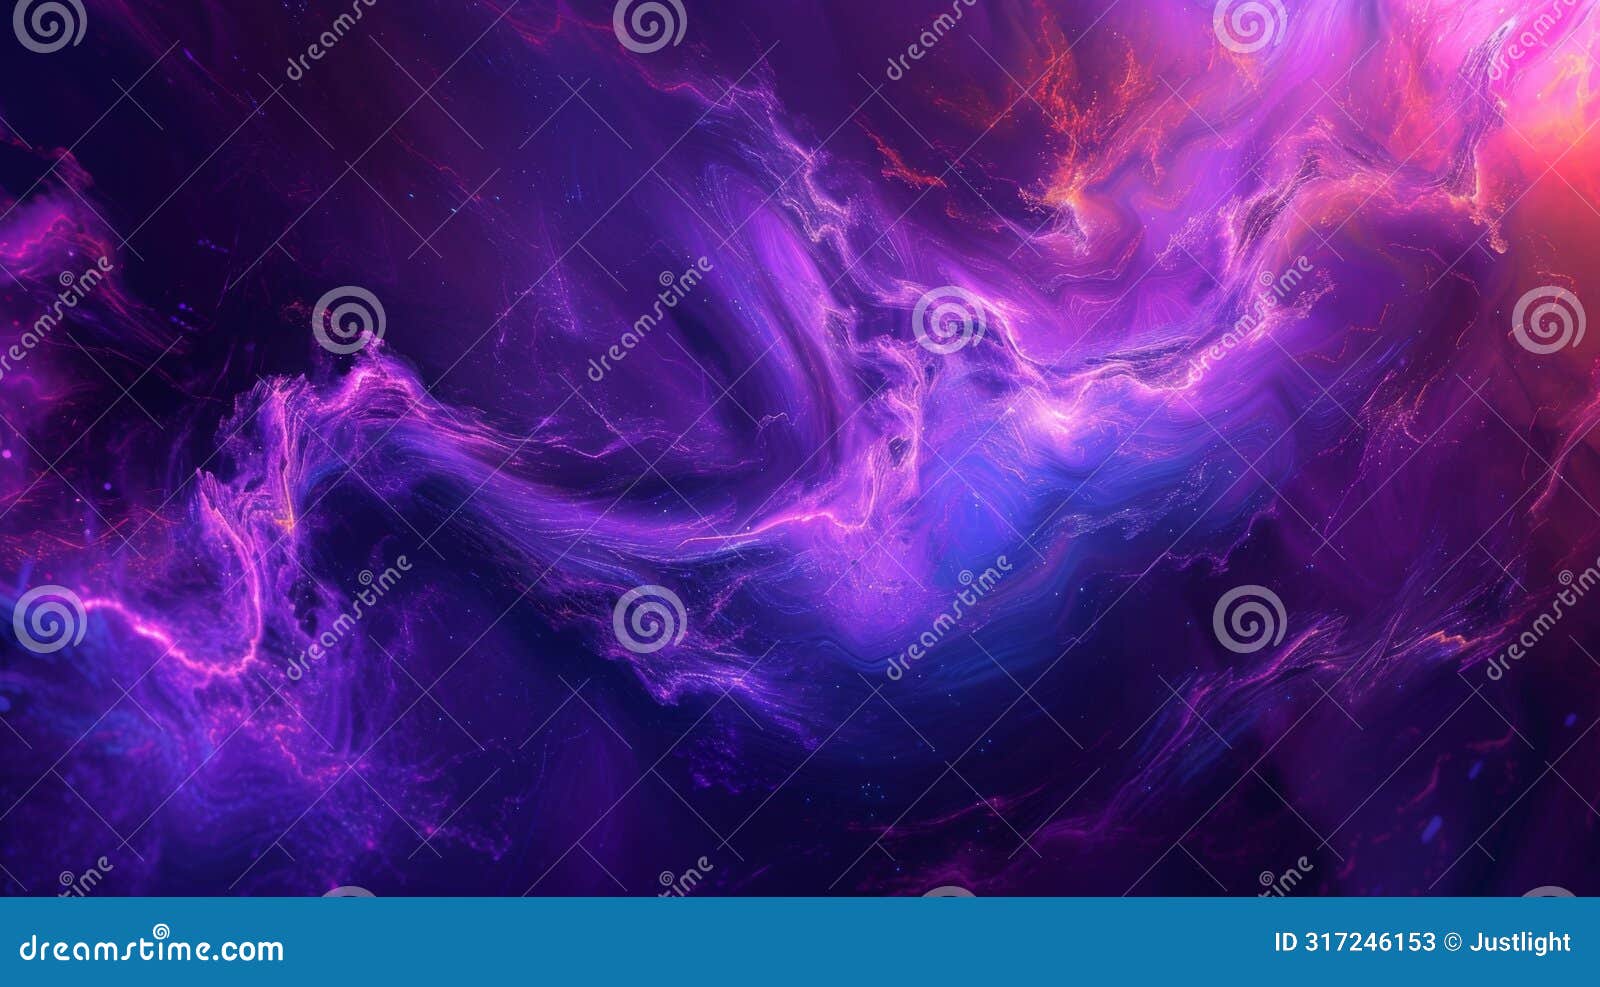 swirls of phosphorescent purples and blazing magentas dominate the ultraviolet spectrum revealing the otherworldly